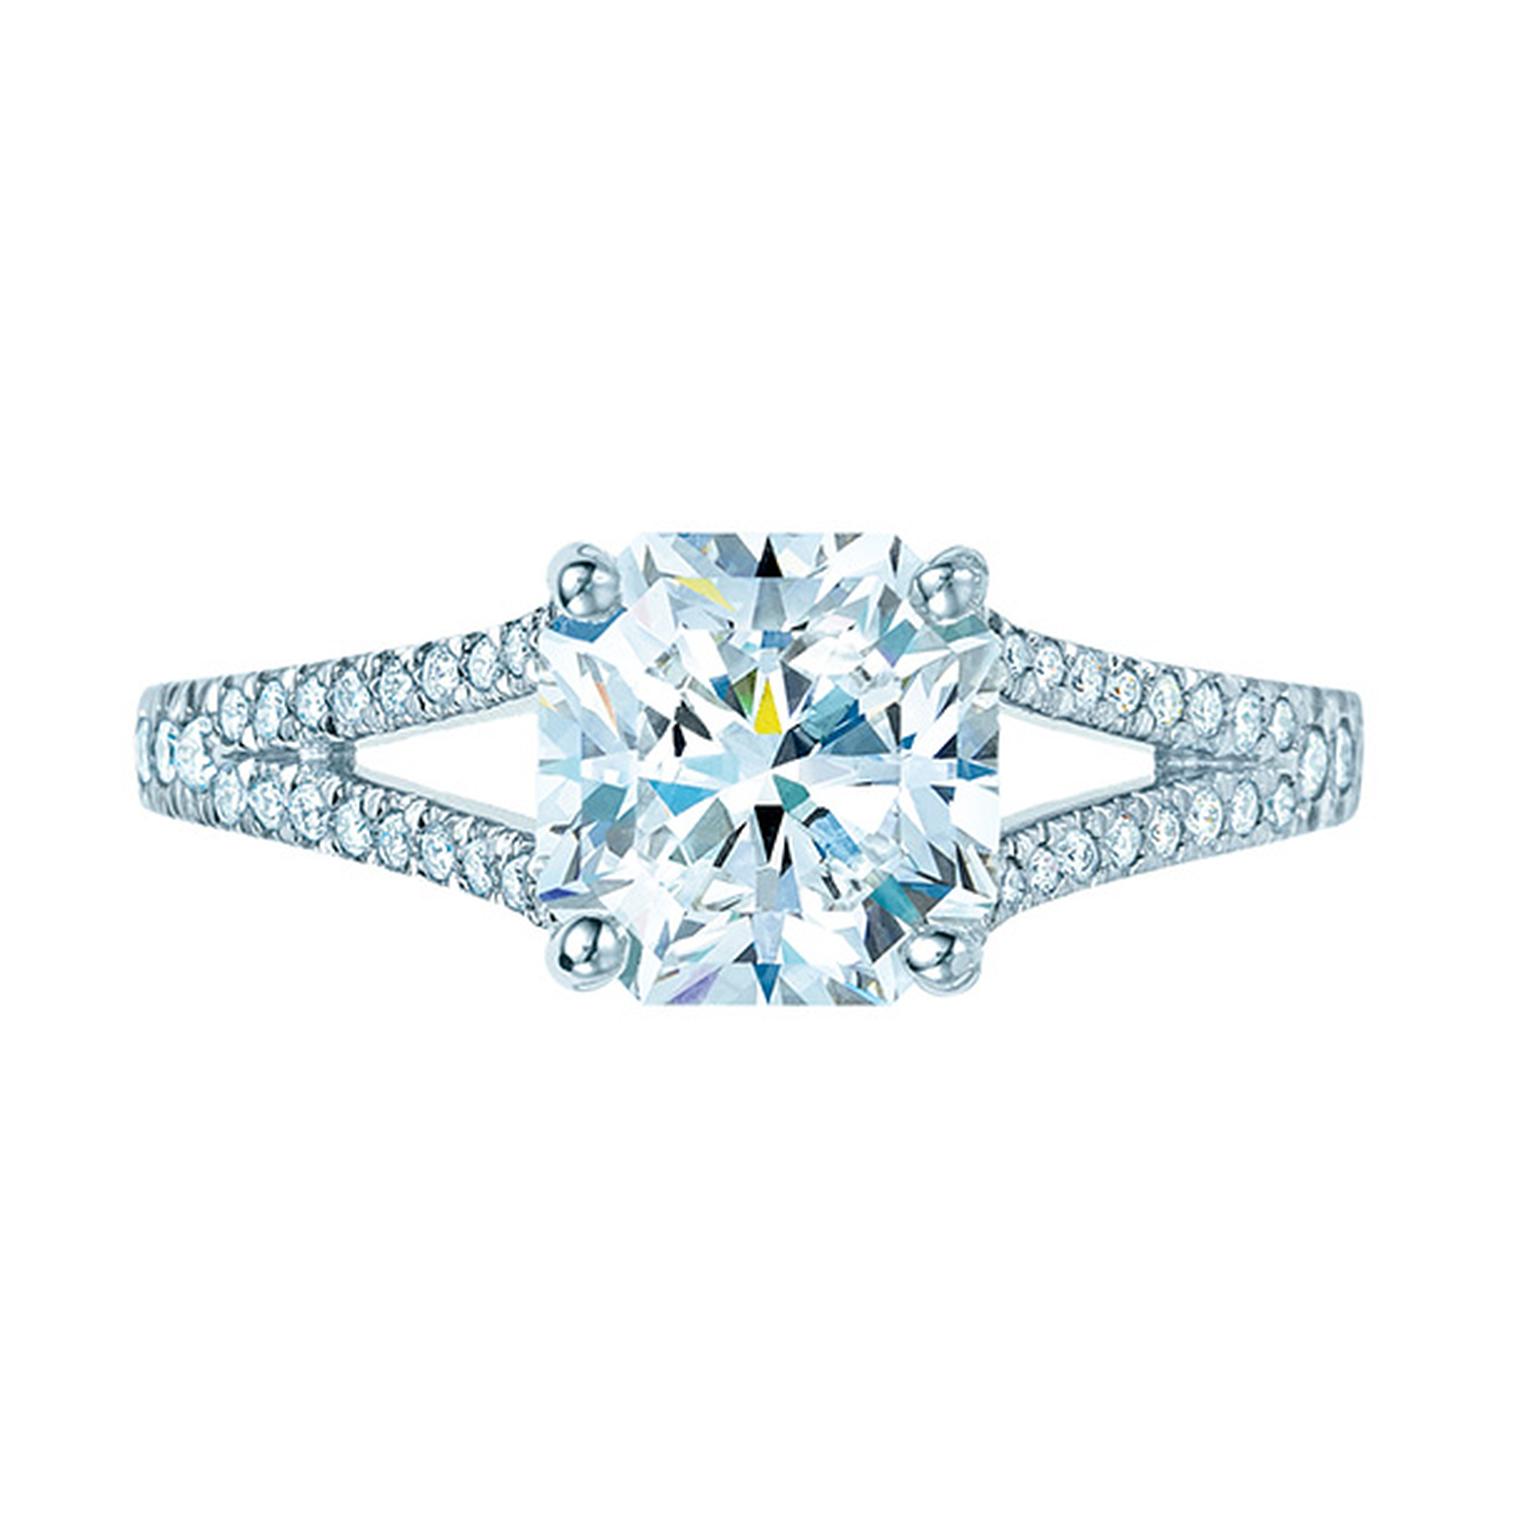 Tiffany Lucida solitaire diamond engagement ring